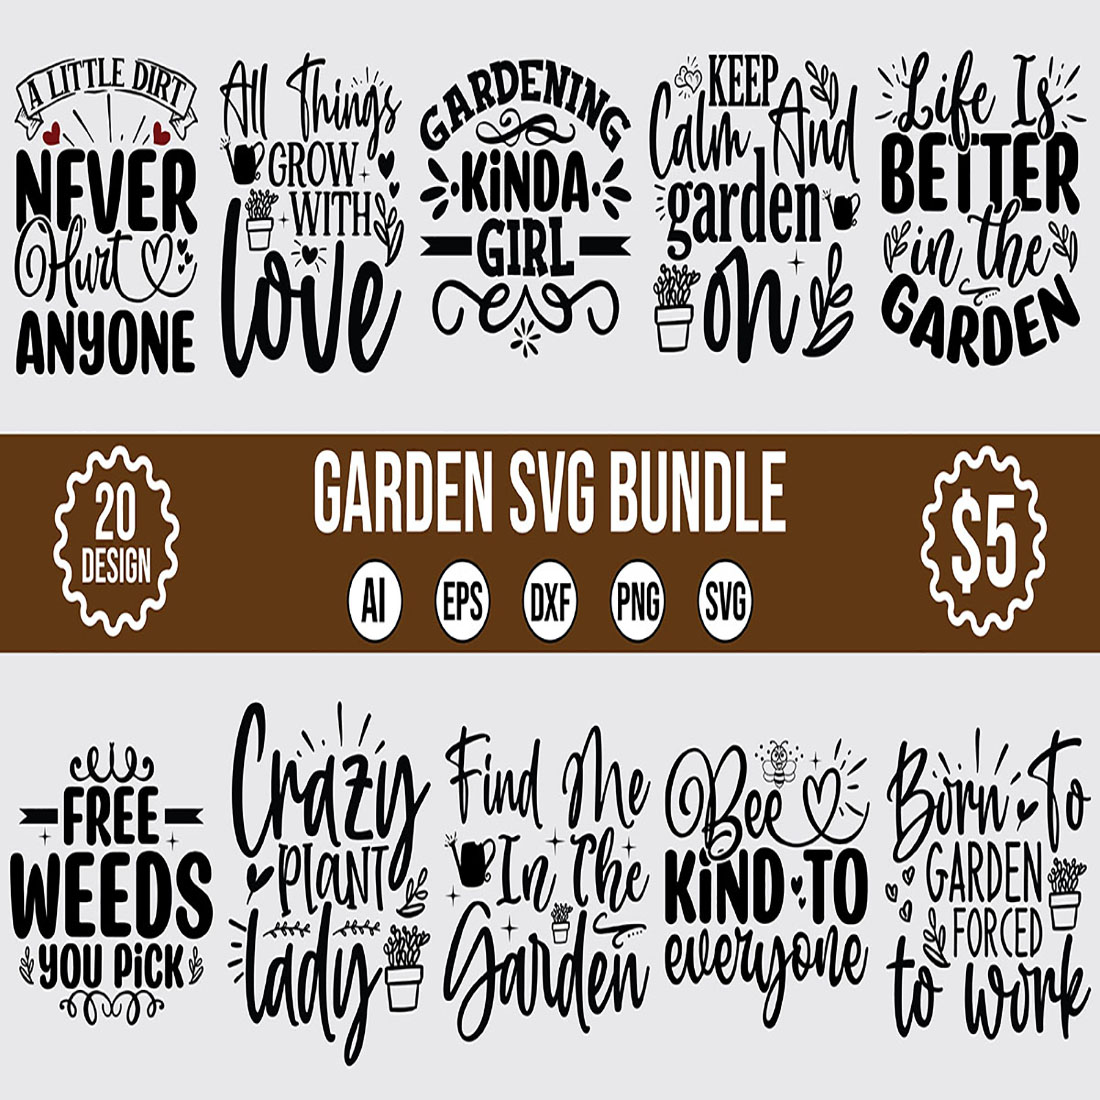 20 Garden SVG Design Bundle Vector Template Vol1 cover image.